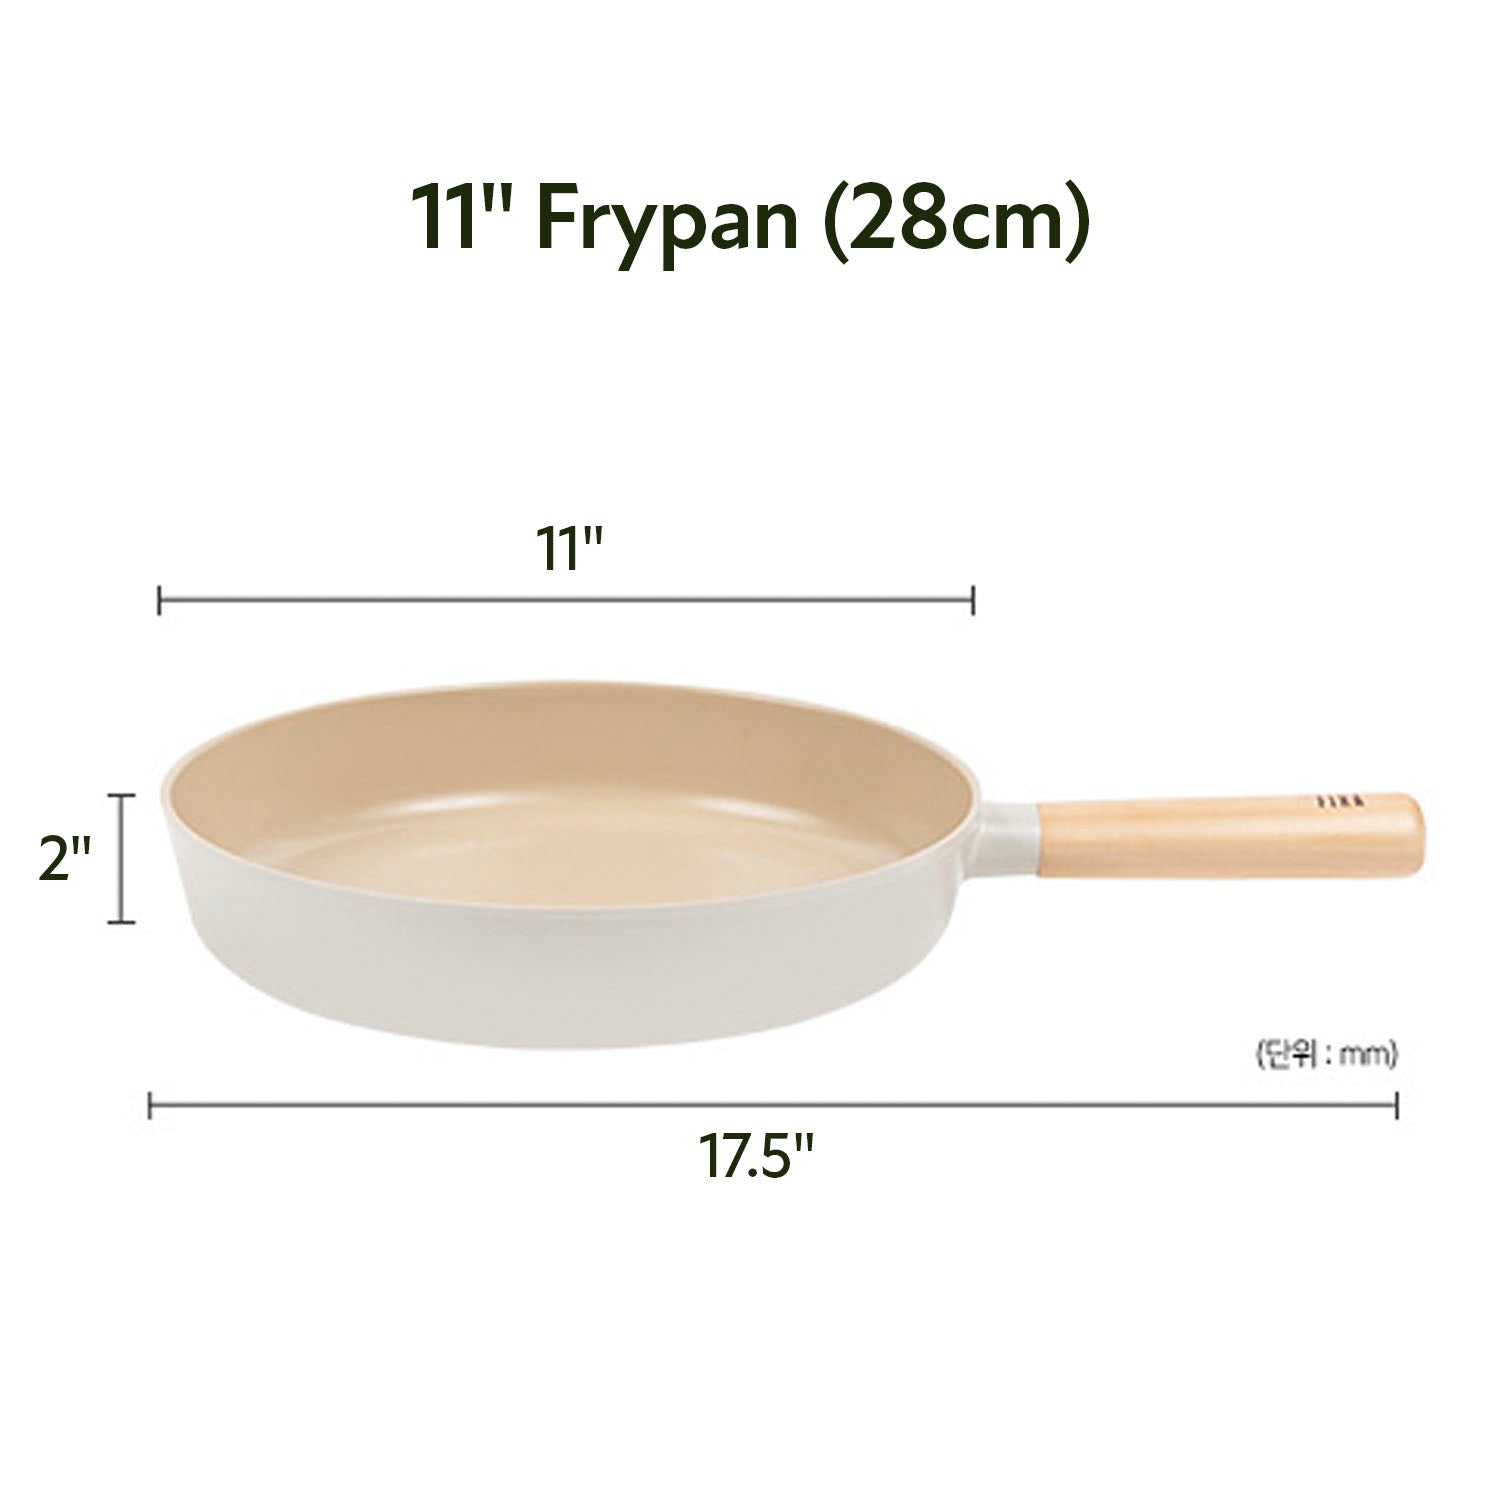 FIKA 11" Frypan (28cm) - Neoflam